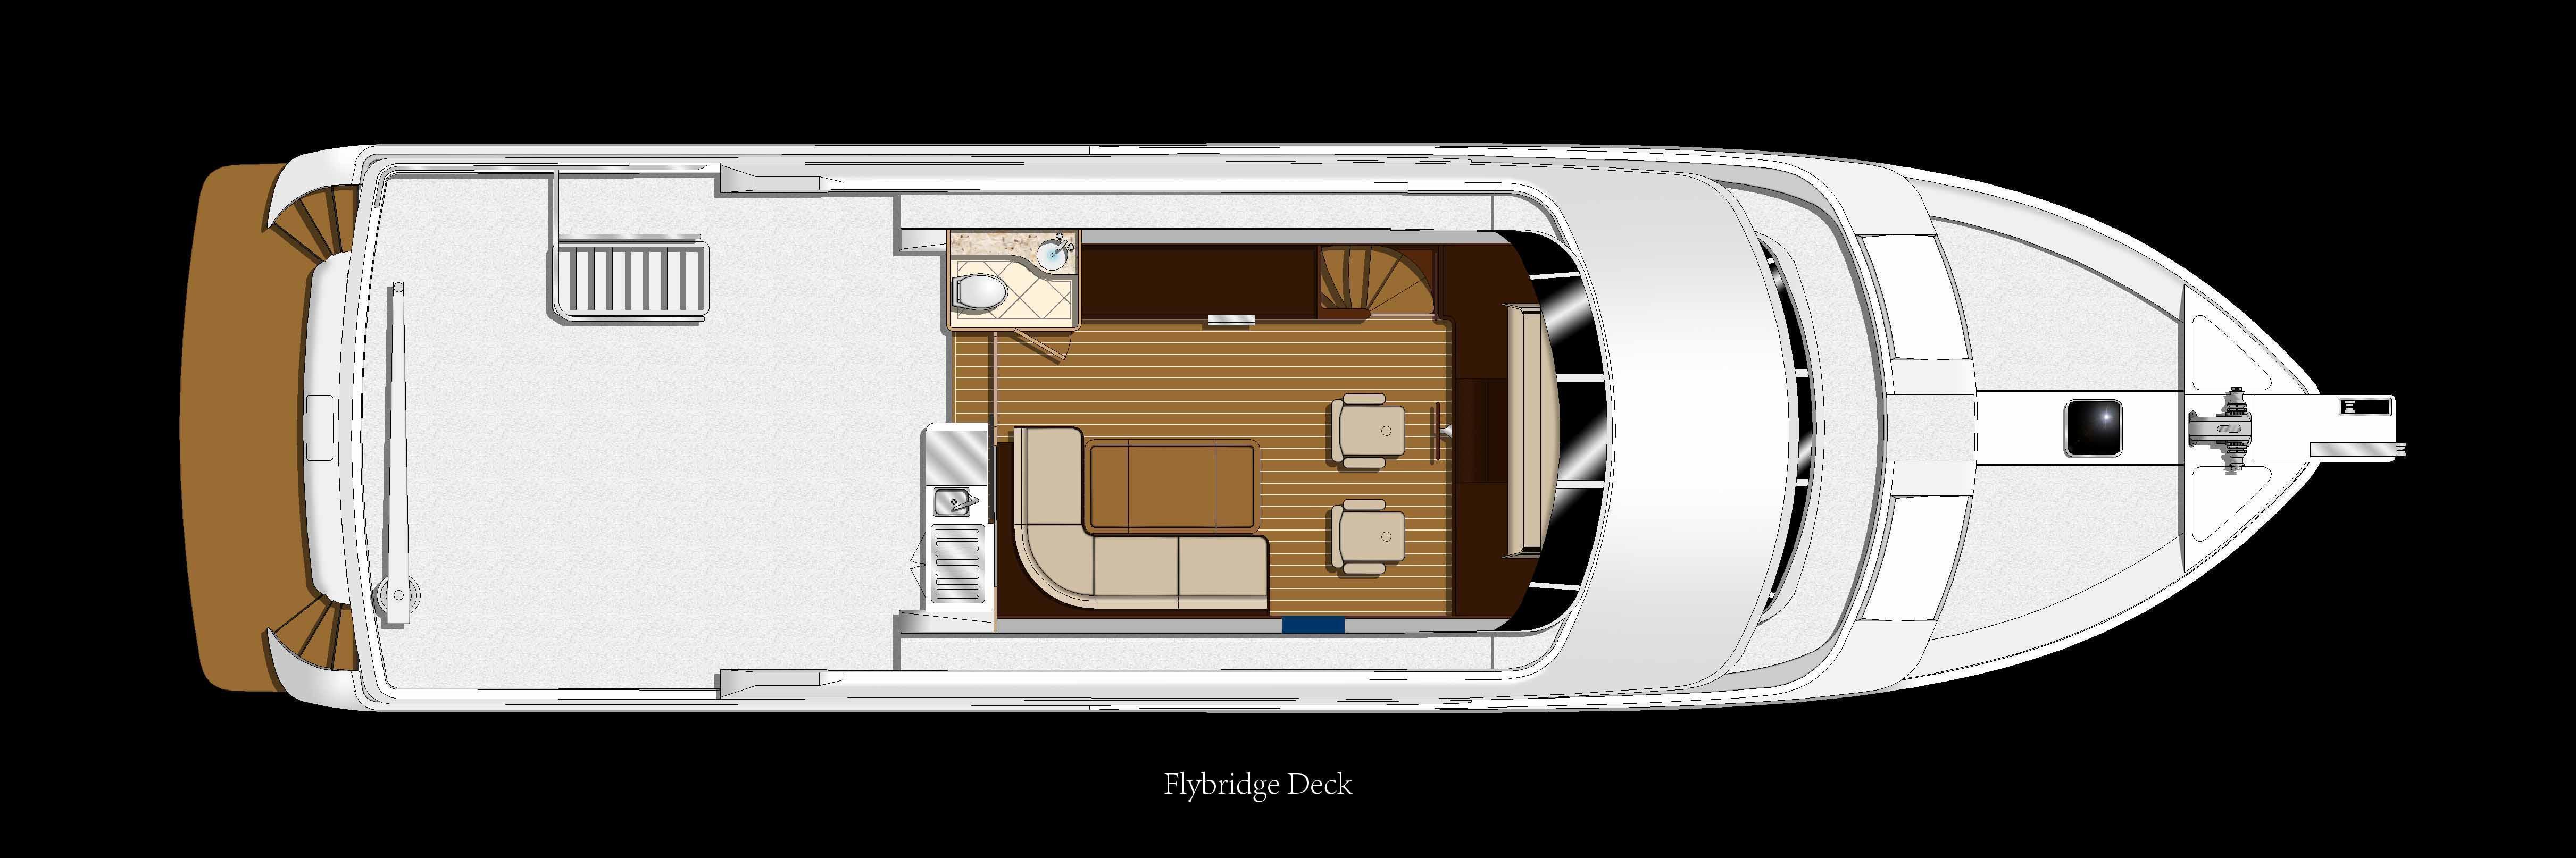 Hampton Yachts 686 Endurance Skylounge, Available for Order